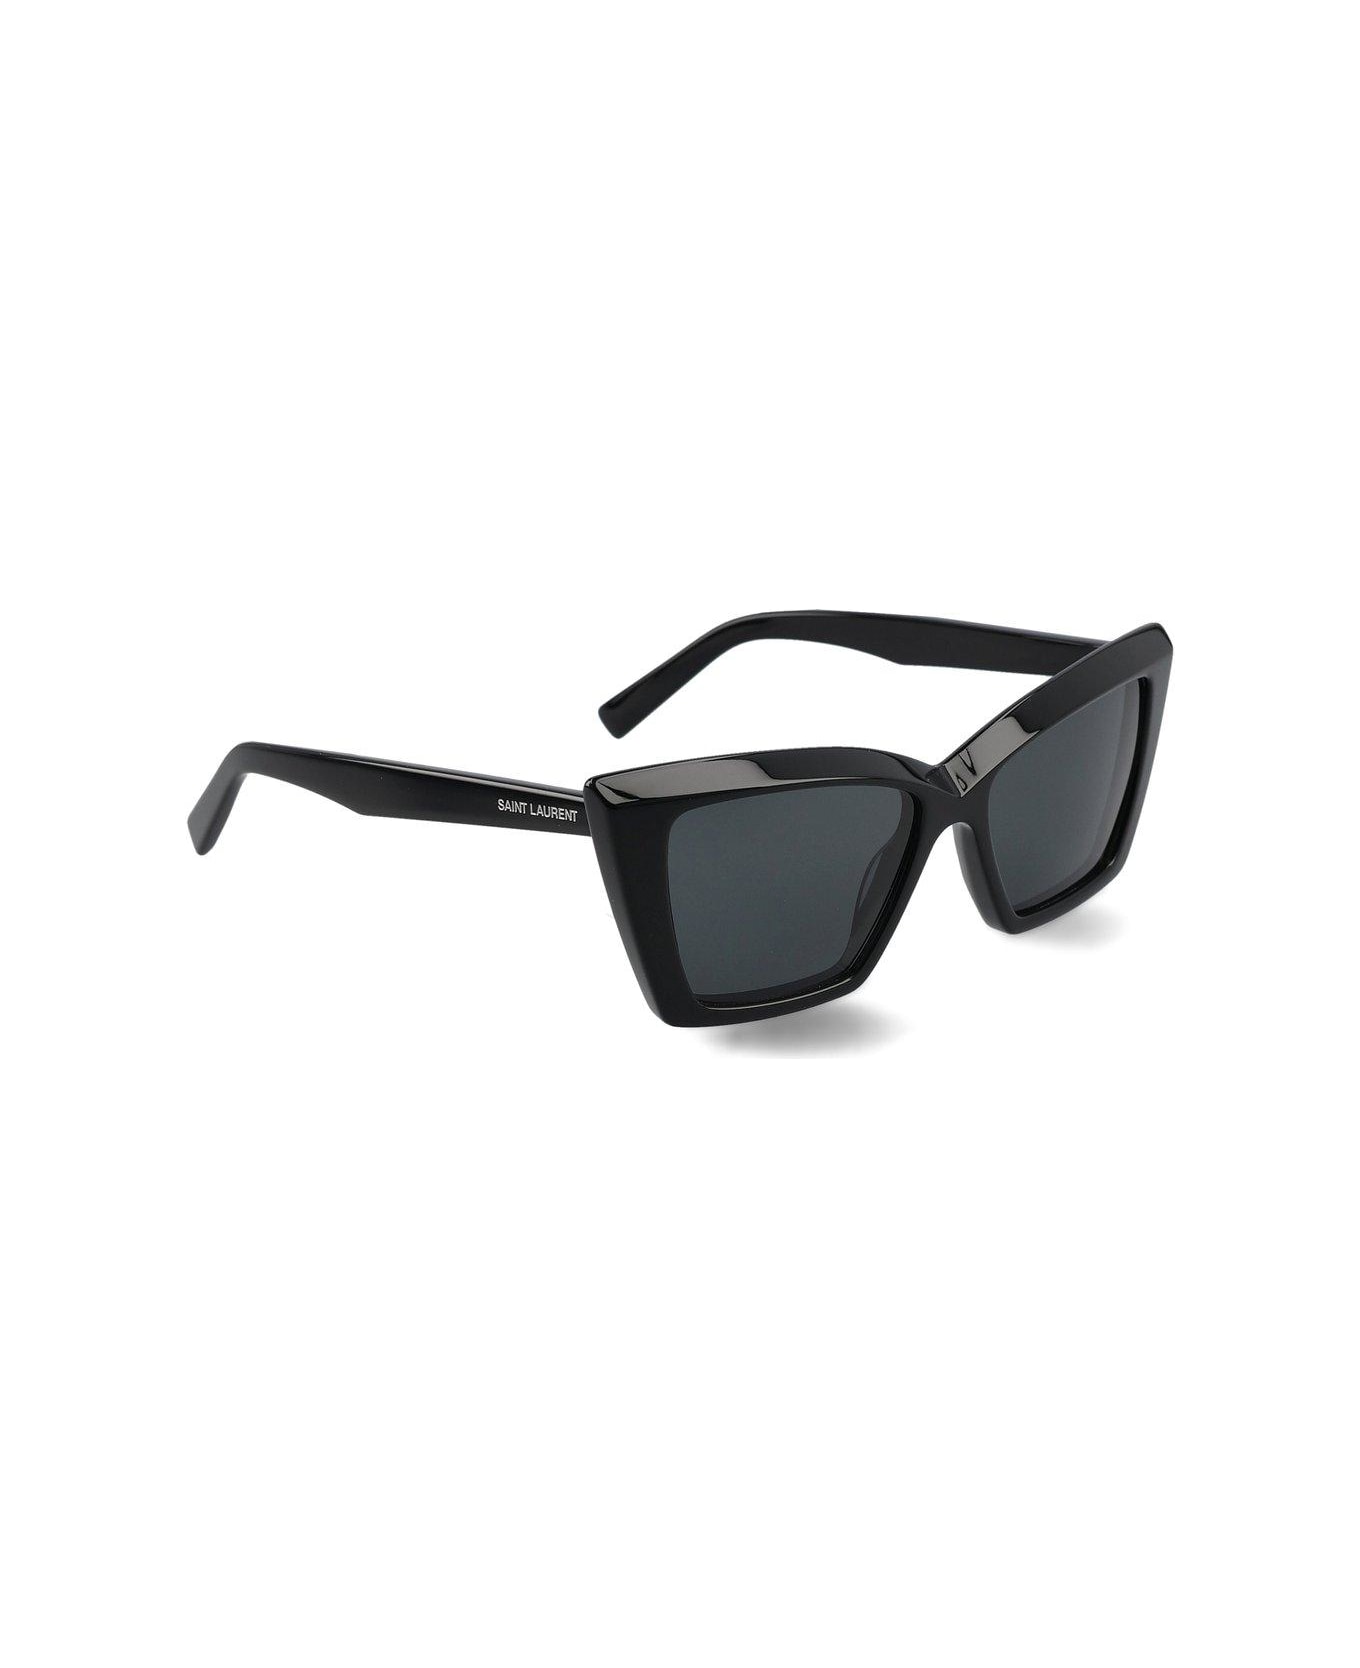 Saint Laurent Eyewear Saint Laurent Sl 657 Square Cat-eye Sunglasses - Black サングラス